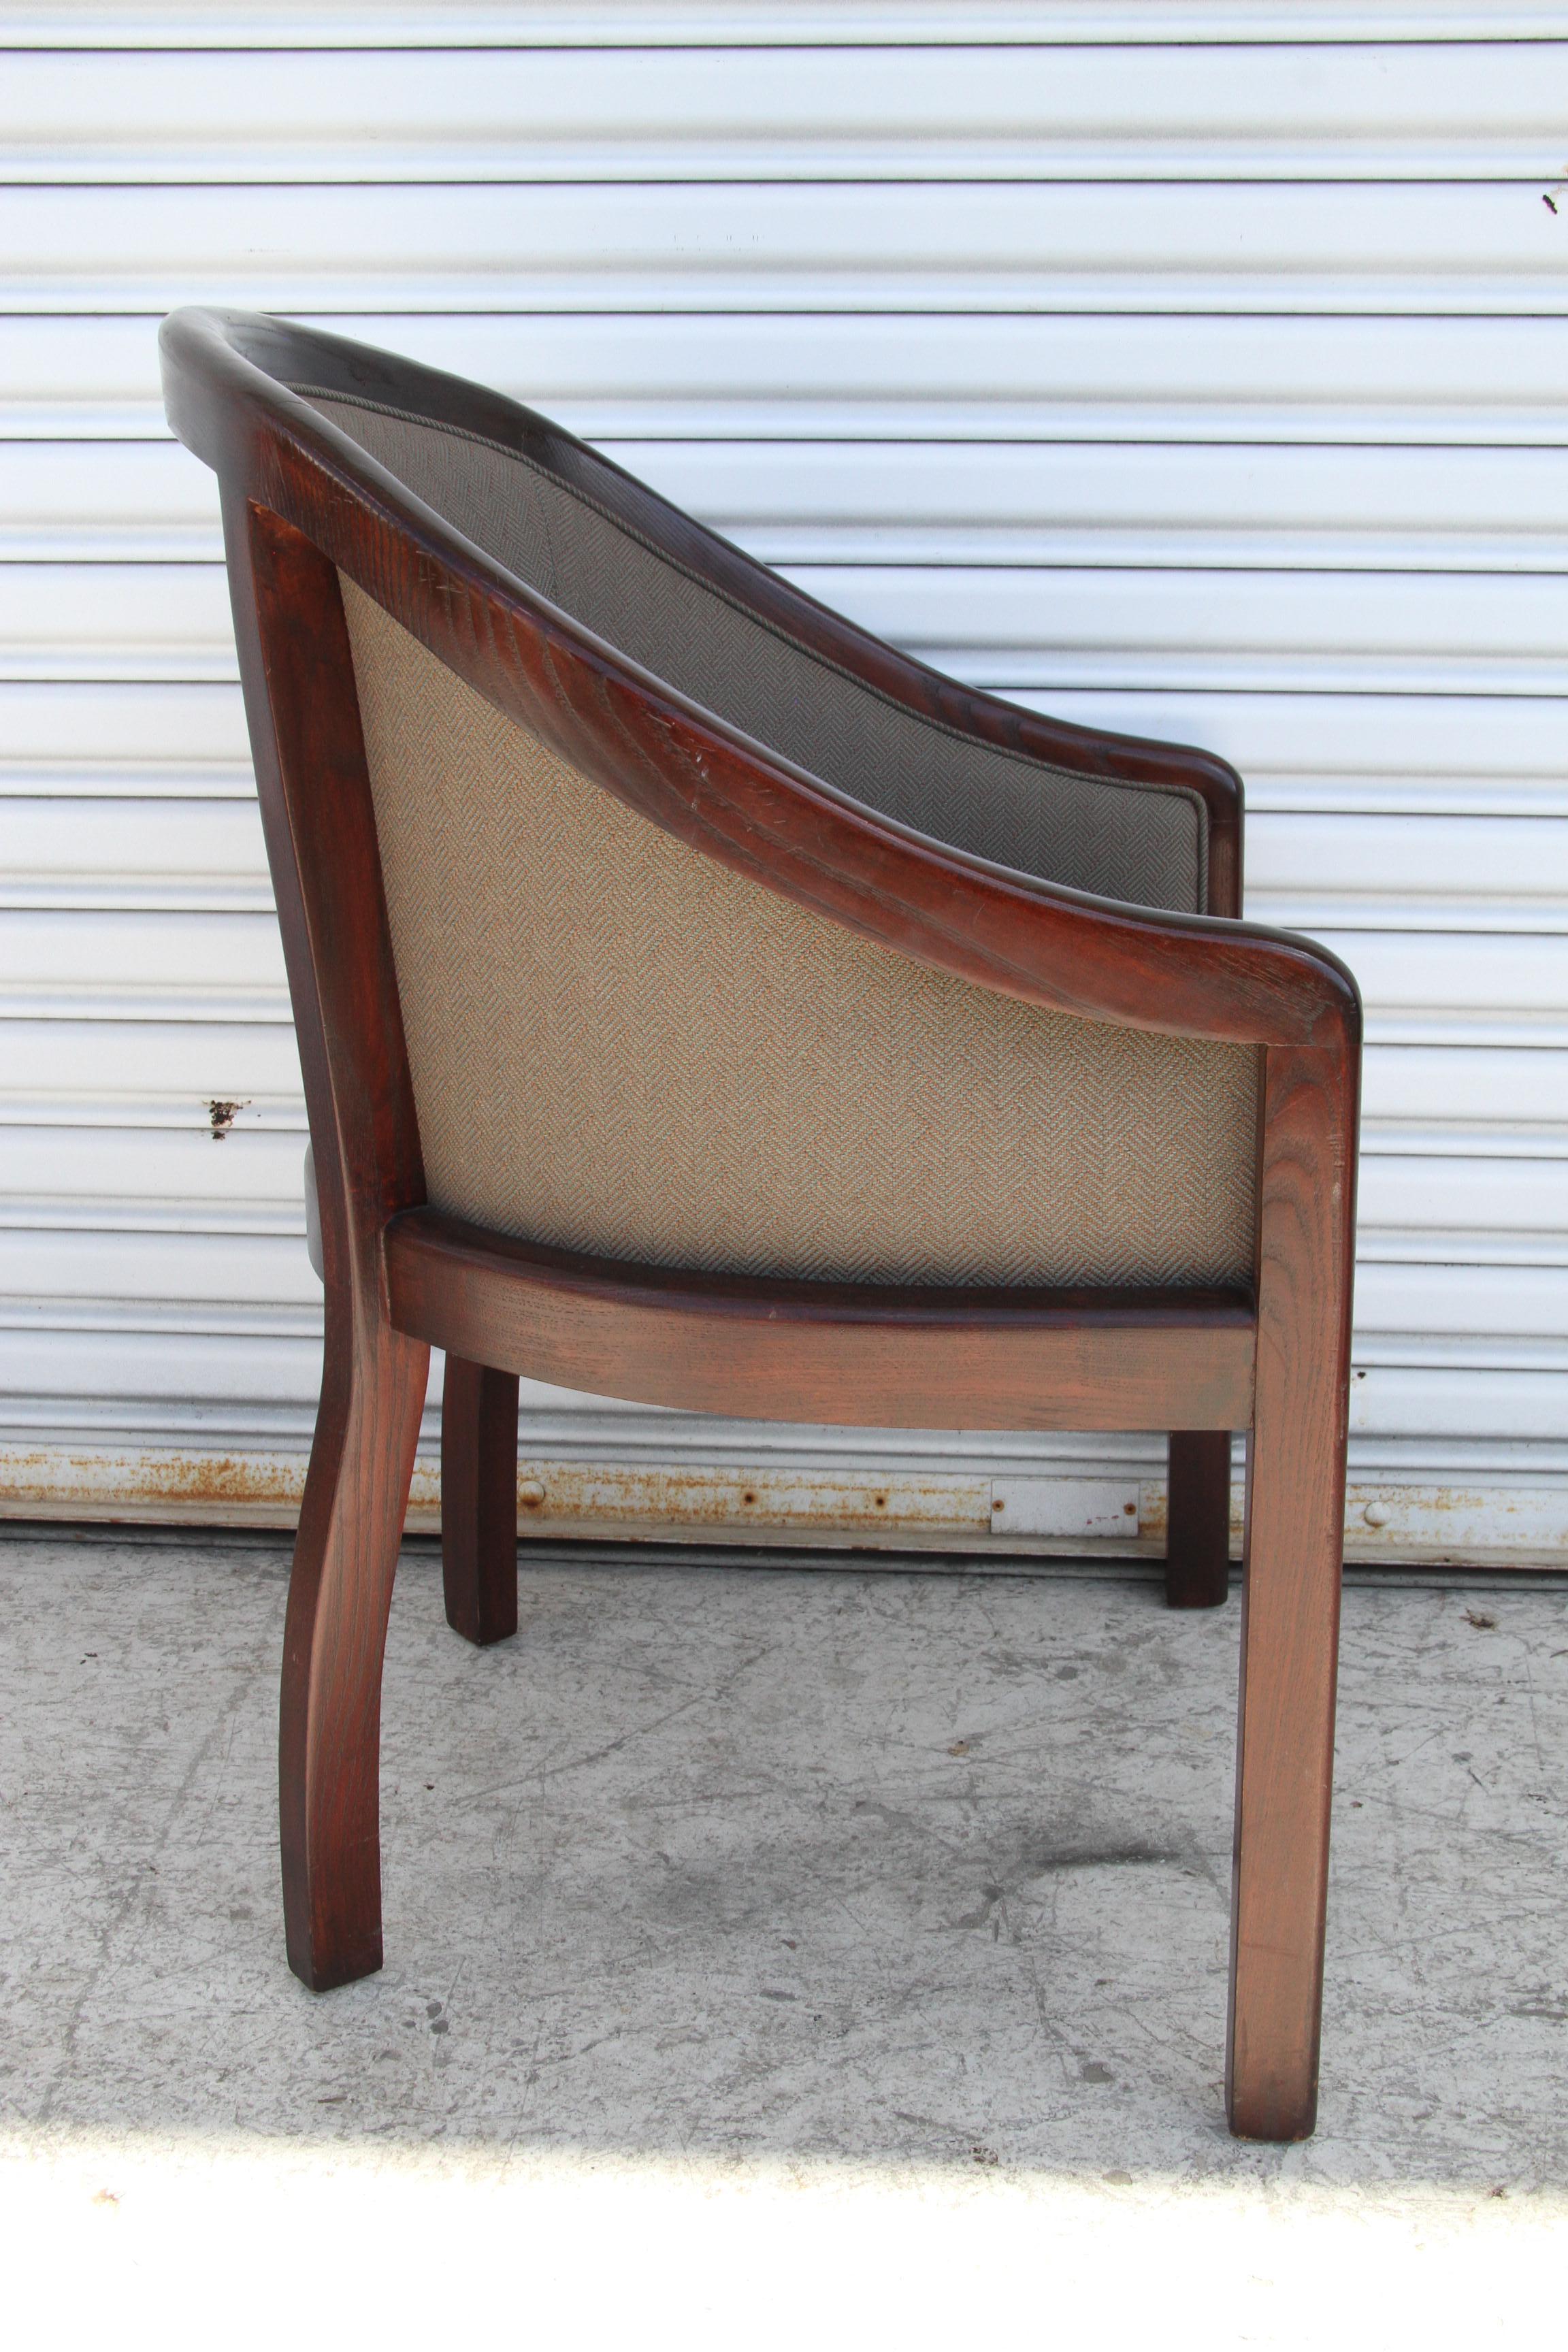 1 Mid Century Jack Lenor Larsen Barrel Chair (Walnuss)